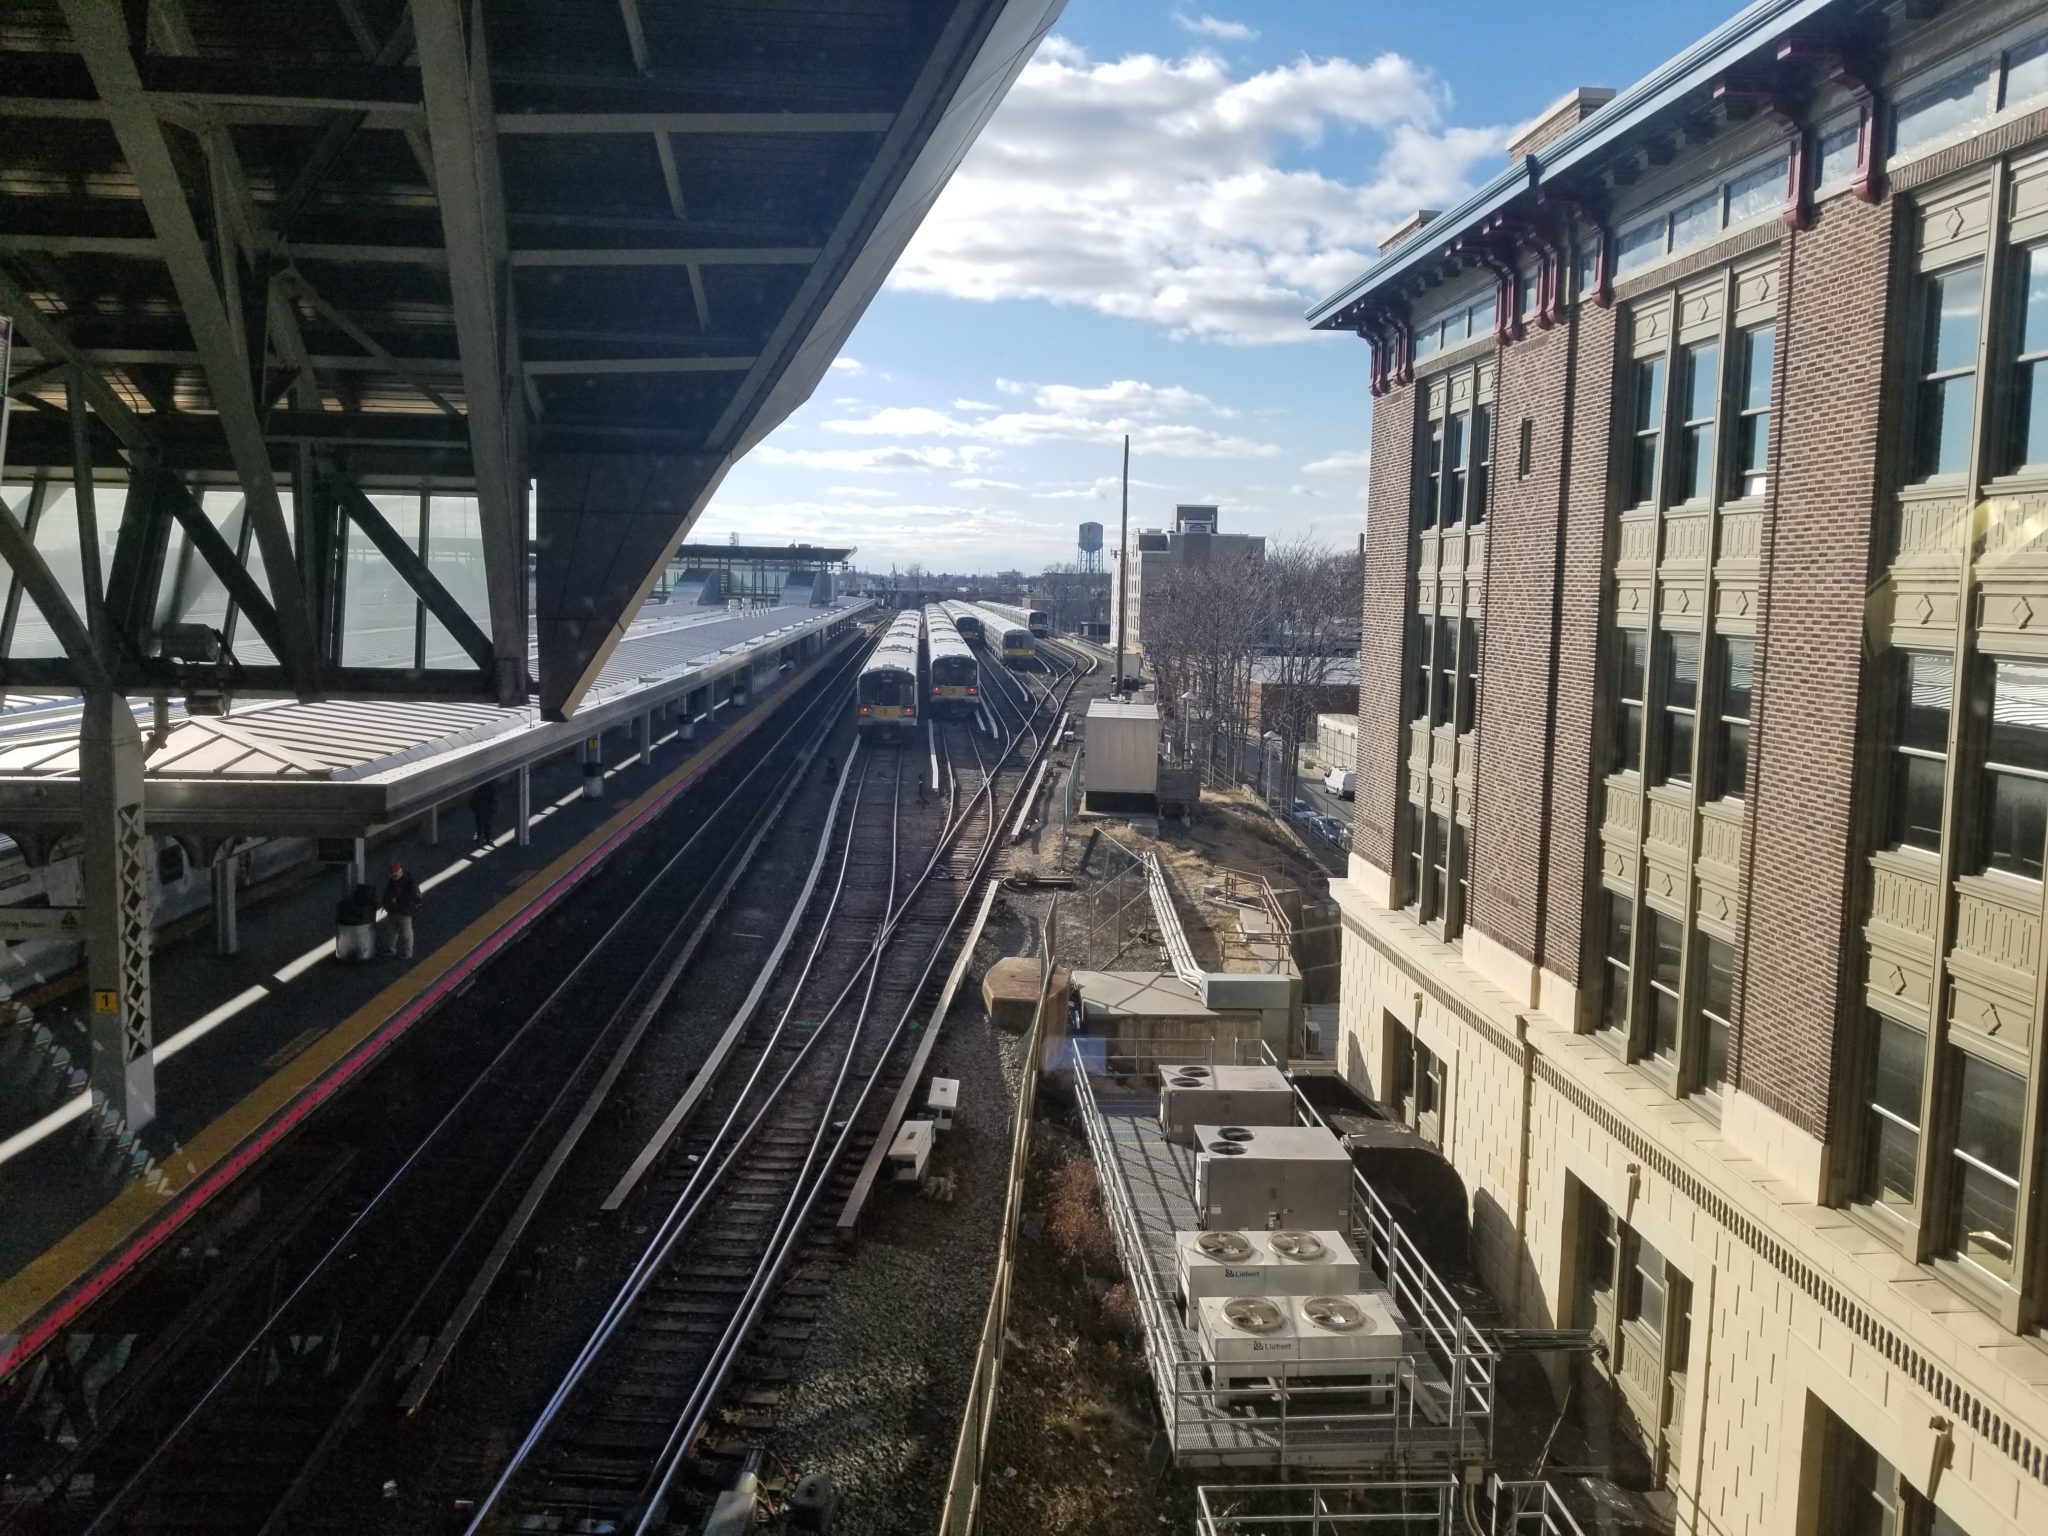 train tracks next to buildings